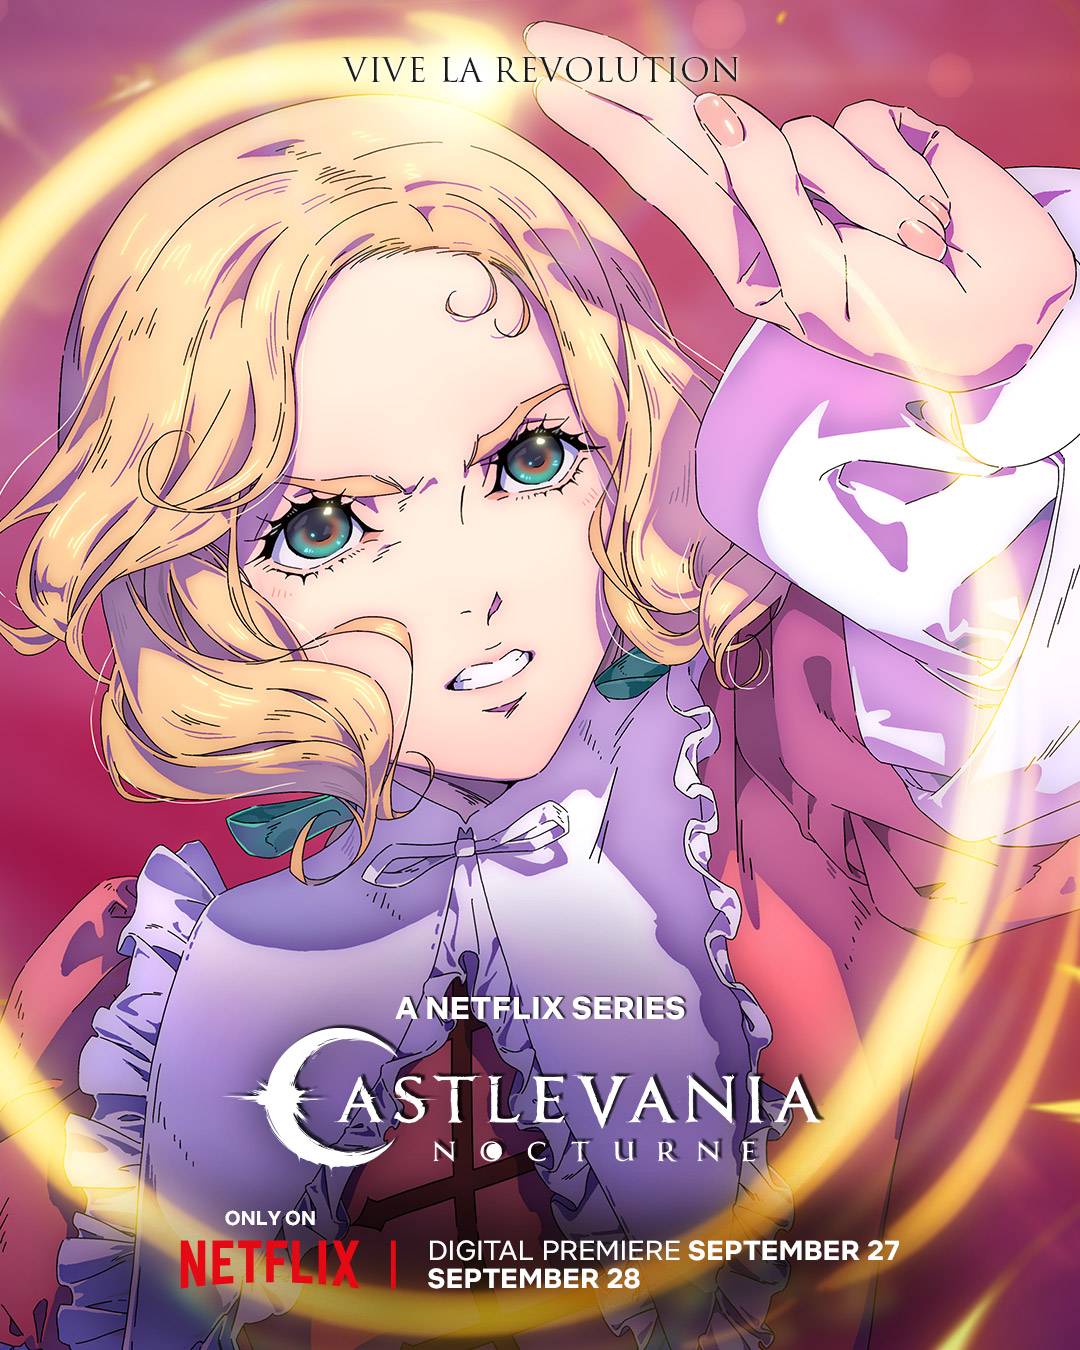 Novo TRAILER Castlevania_ Nocturne e DATA de Estréia #netflix #trailer # anime #castlevania in 2023